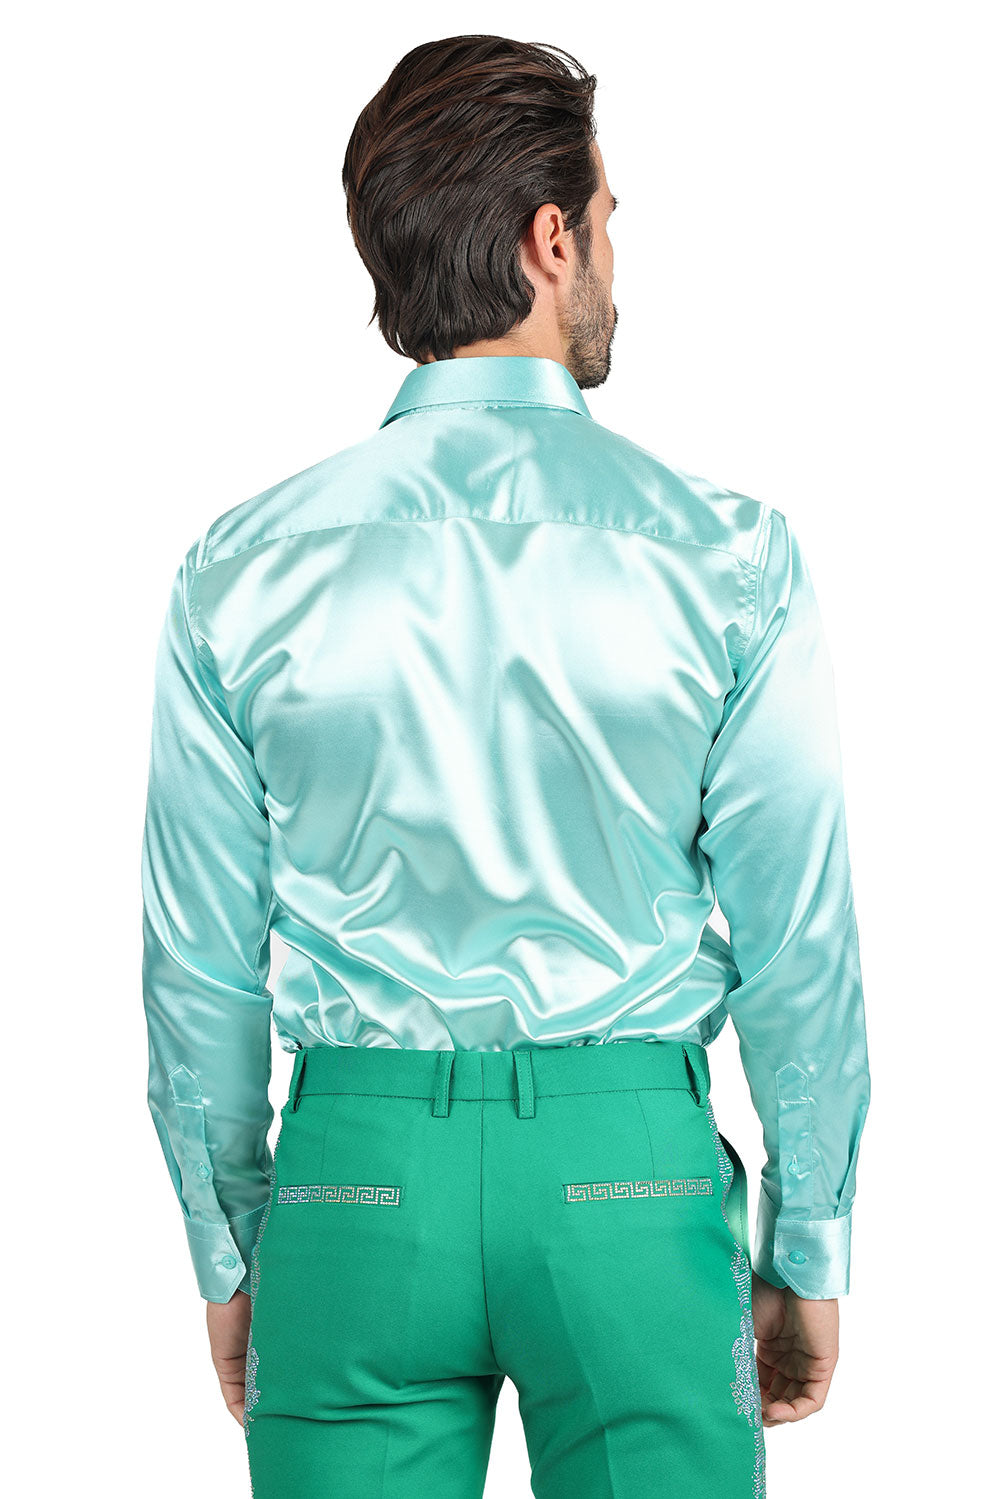 BARABAS Mens Luxury Shiny Long Sleeve Button Down Metallic Shirts B312 Mint